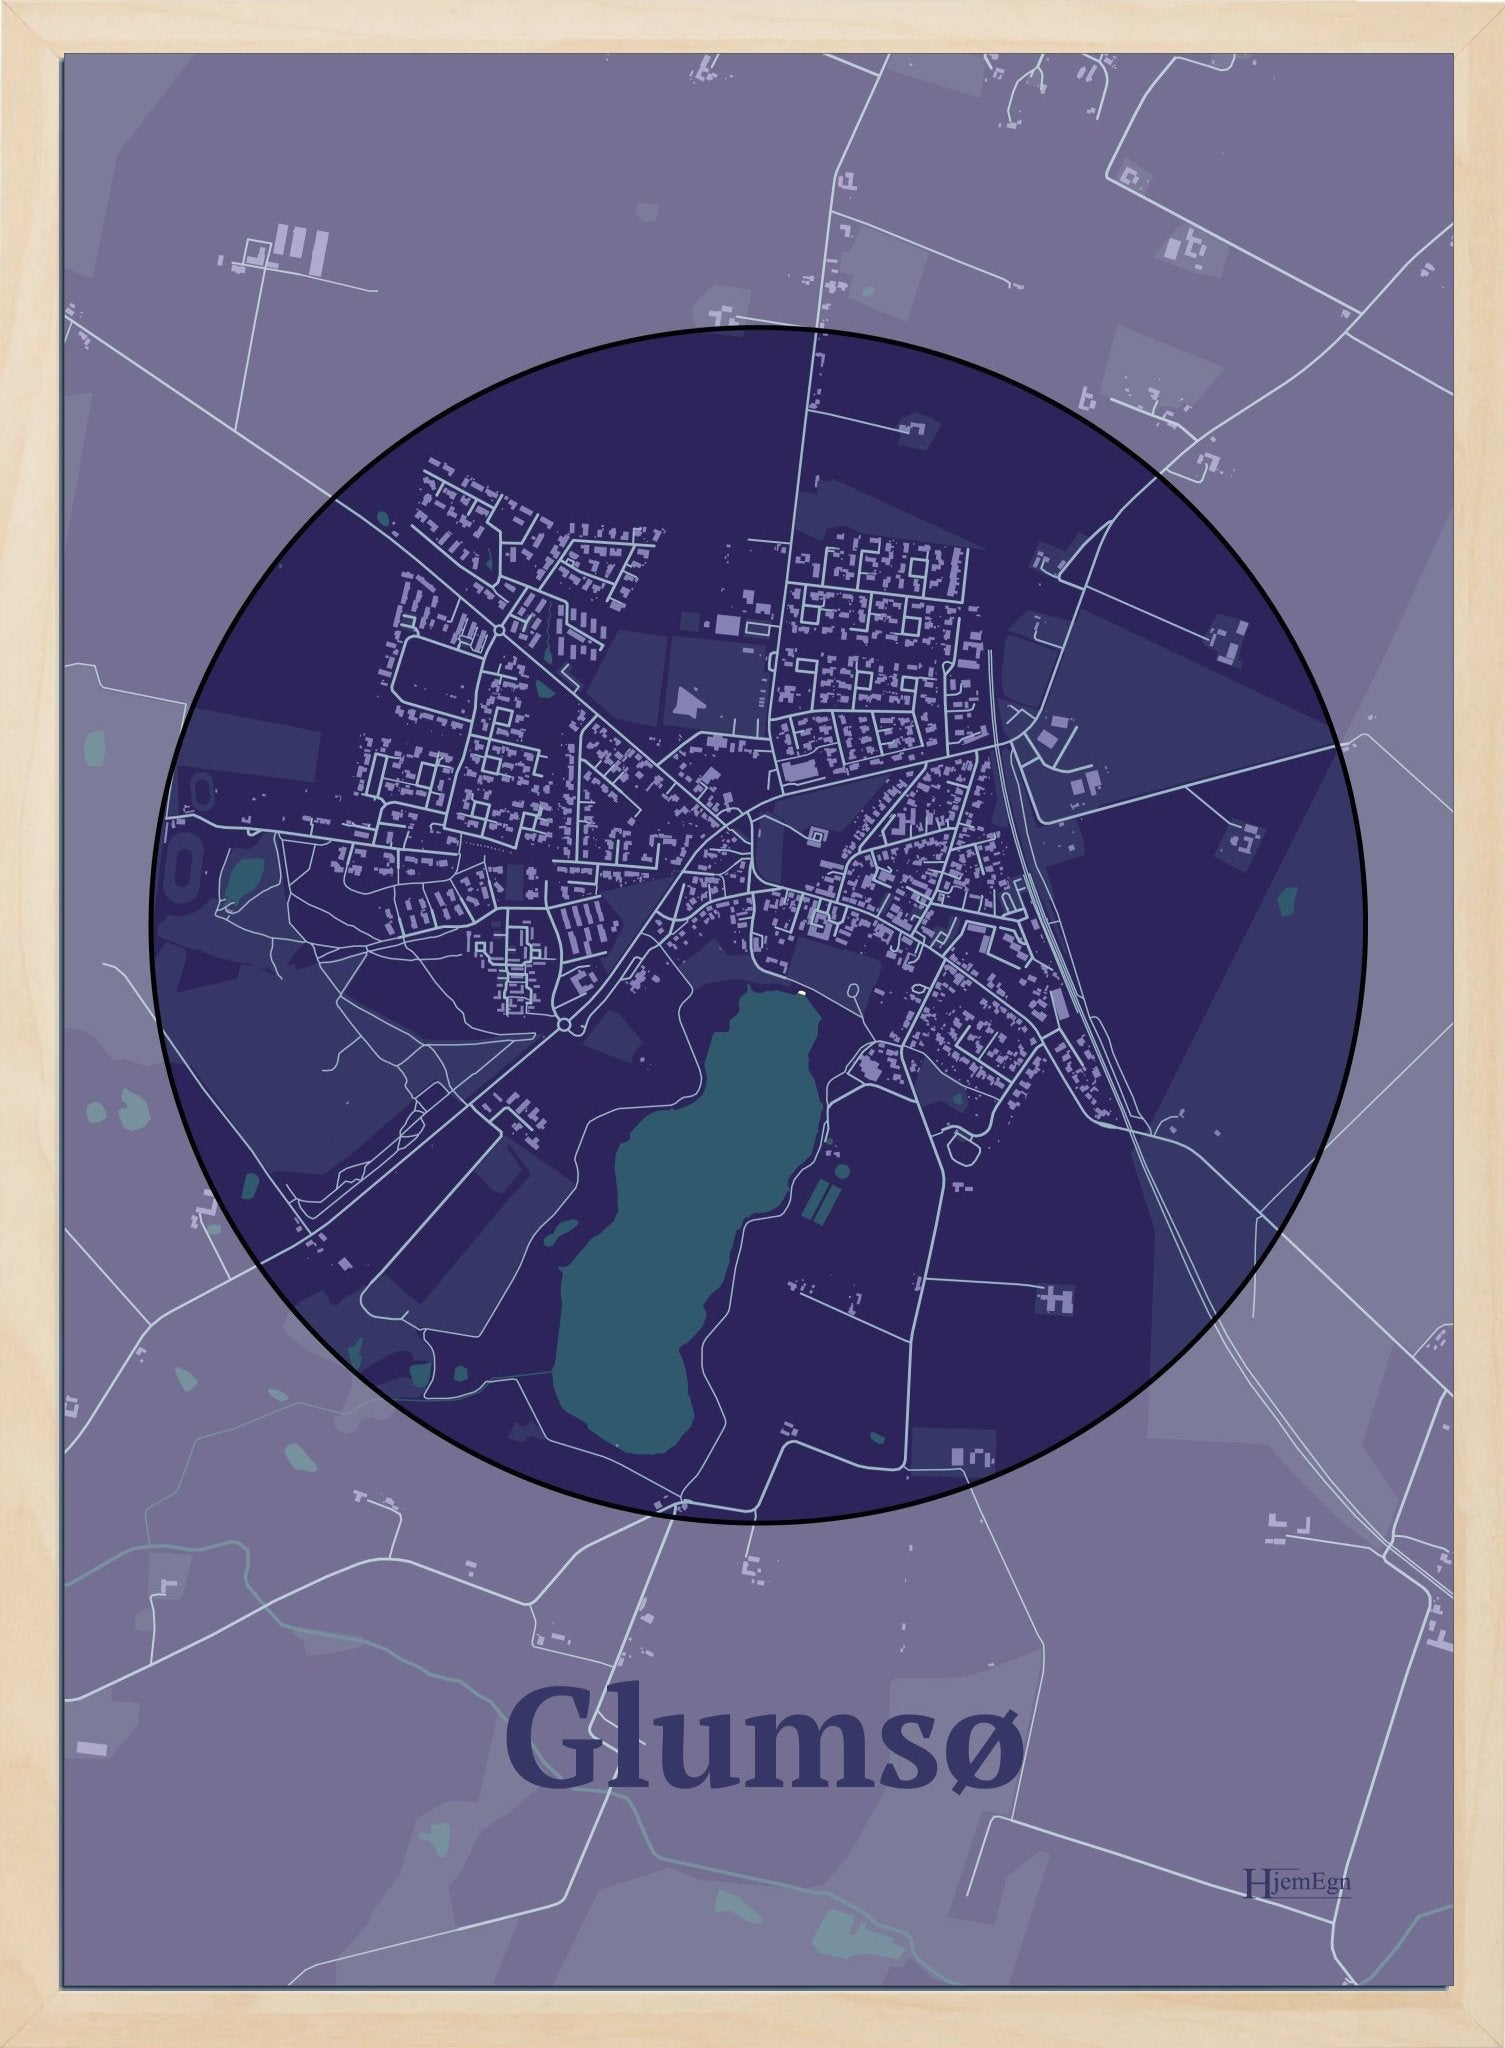 Glumsø plakat i farve mørk lilla og HjemEgn.dk design centrum. Design bykort for Glumsø